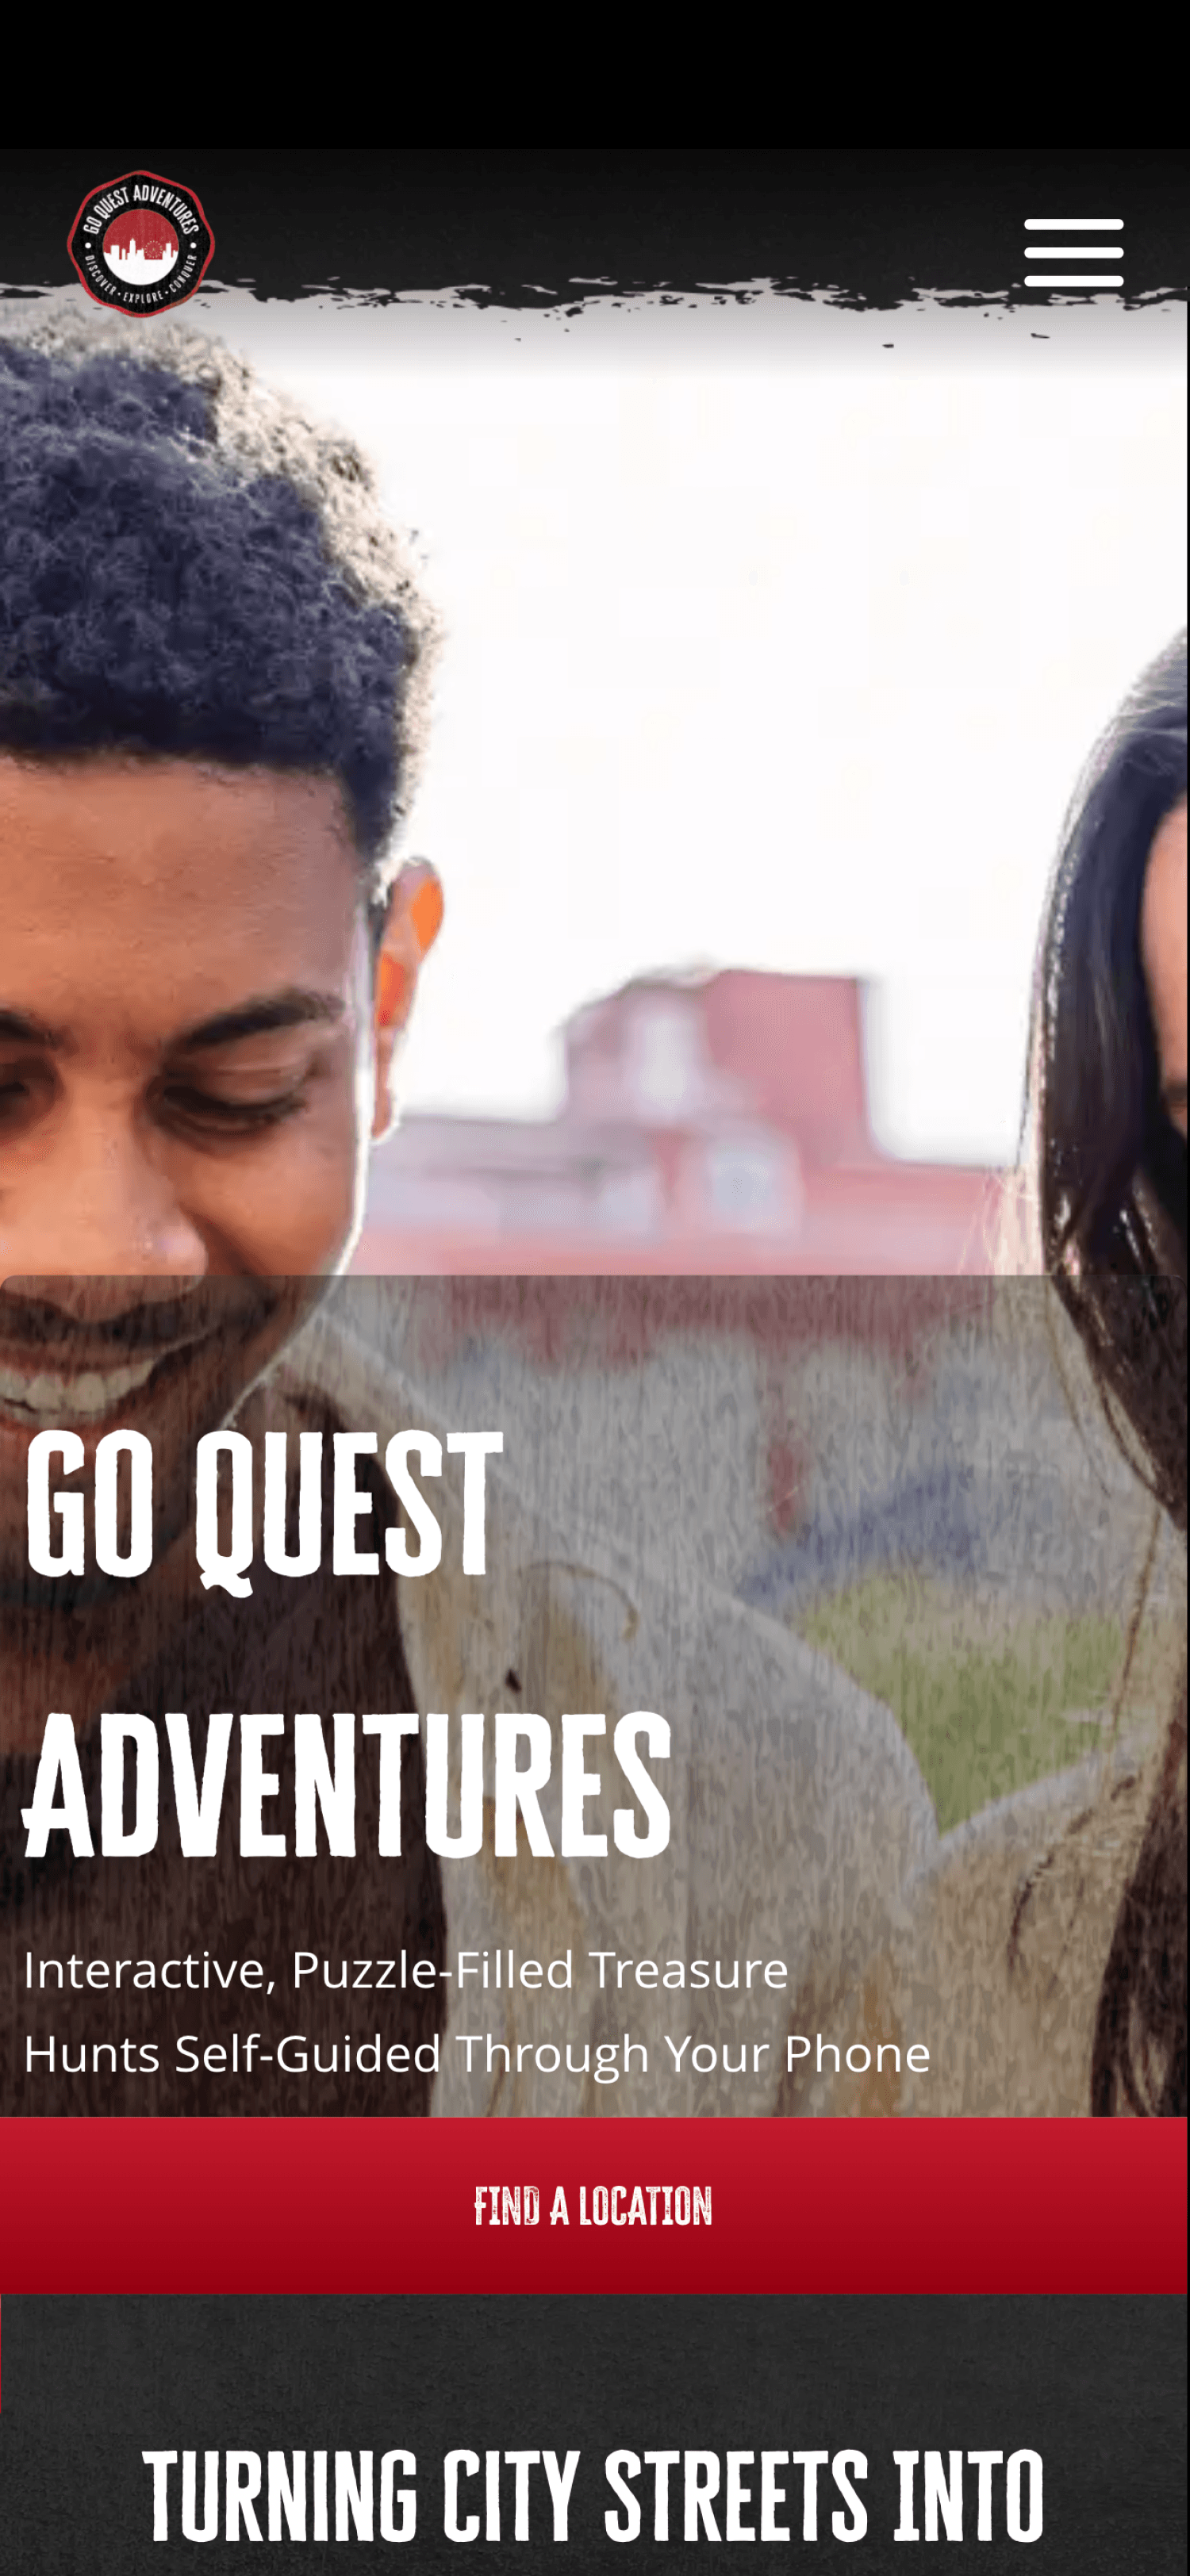 Go Quest Adventure demo 0